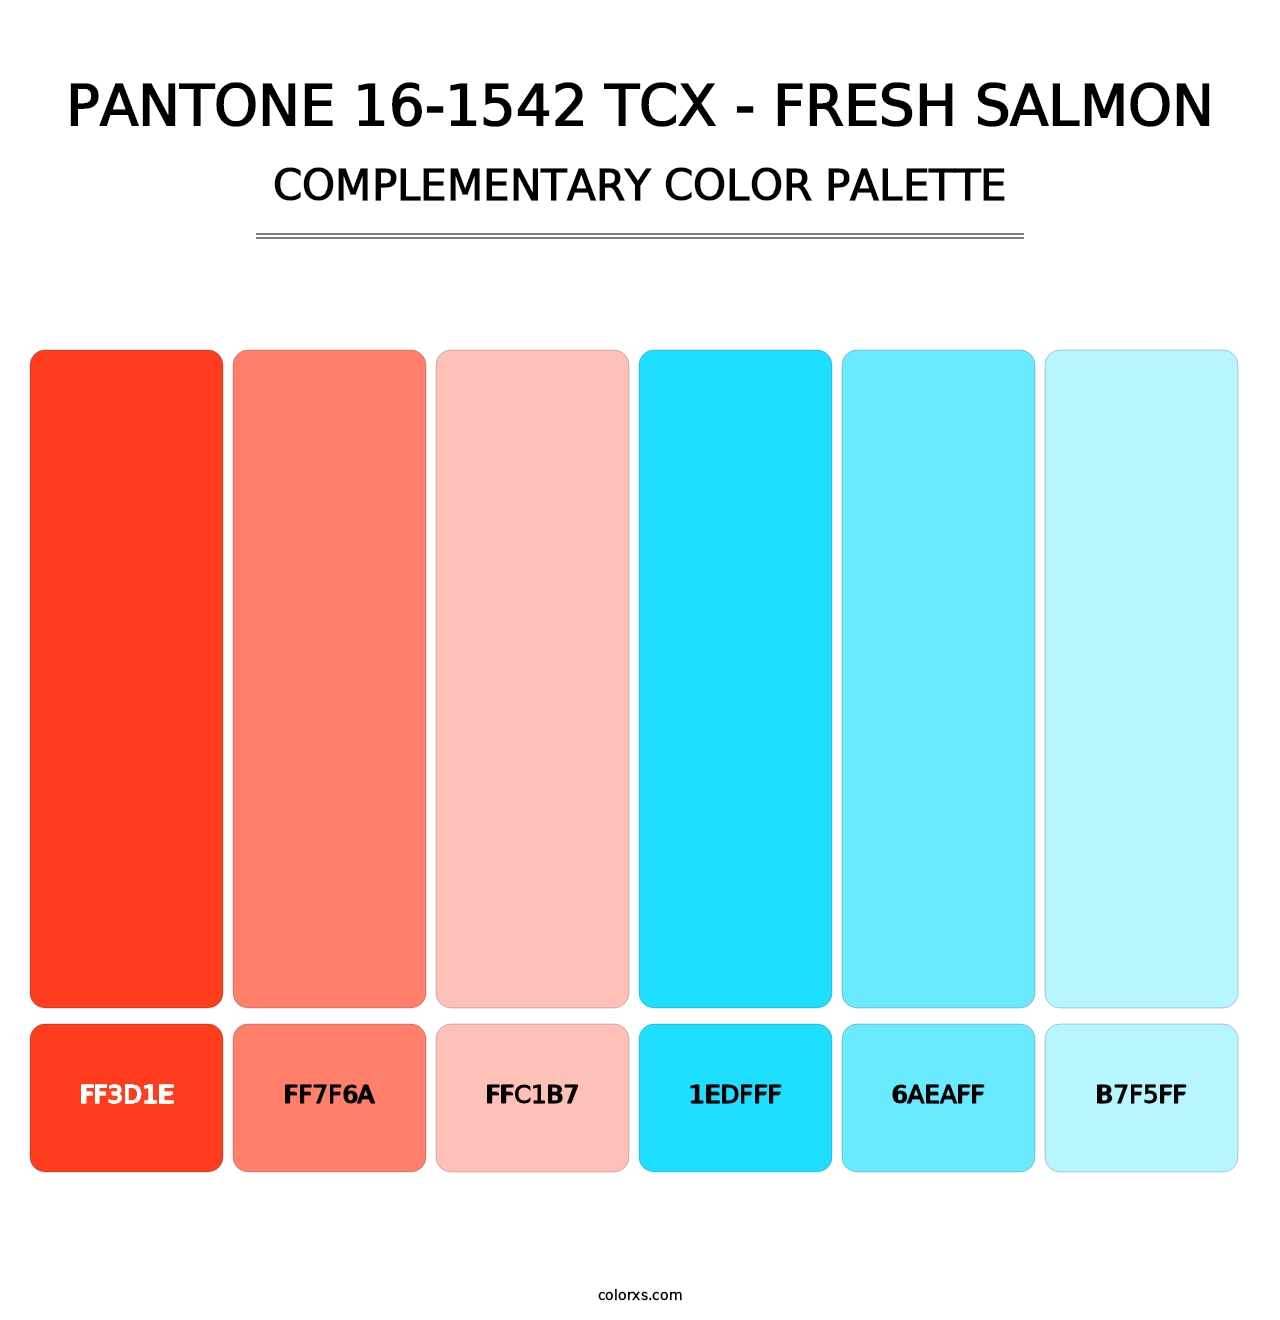 PANTONE 16-1542 TCX - Fresh Salmon - Complementary Color Palette